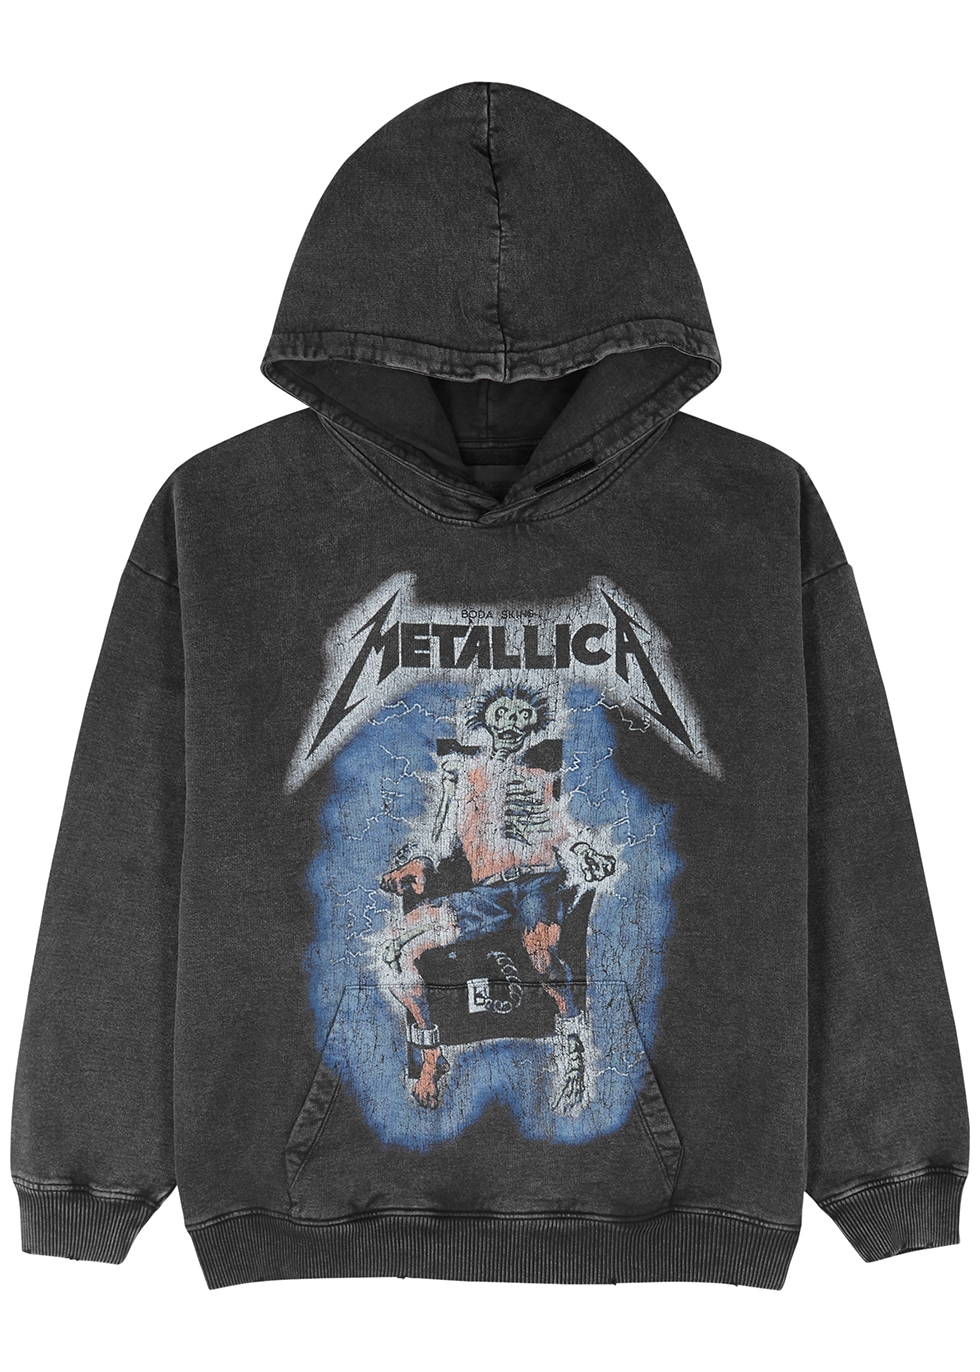 BODA SKINS Metallica Met Ride printed cotton sweatshirt